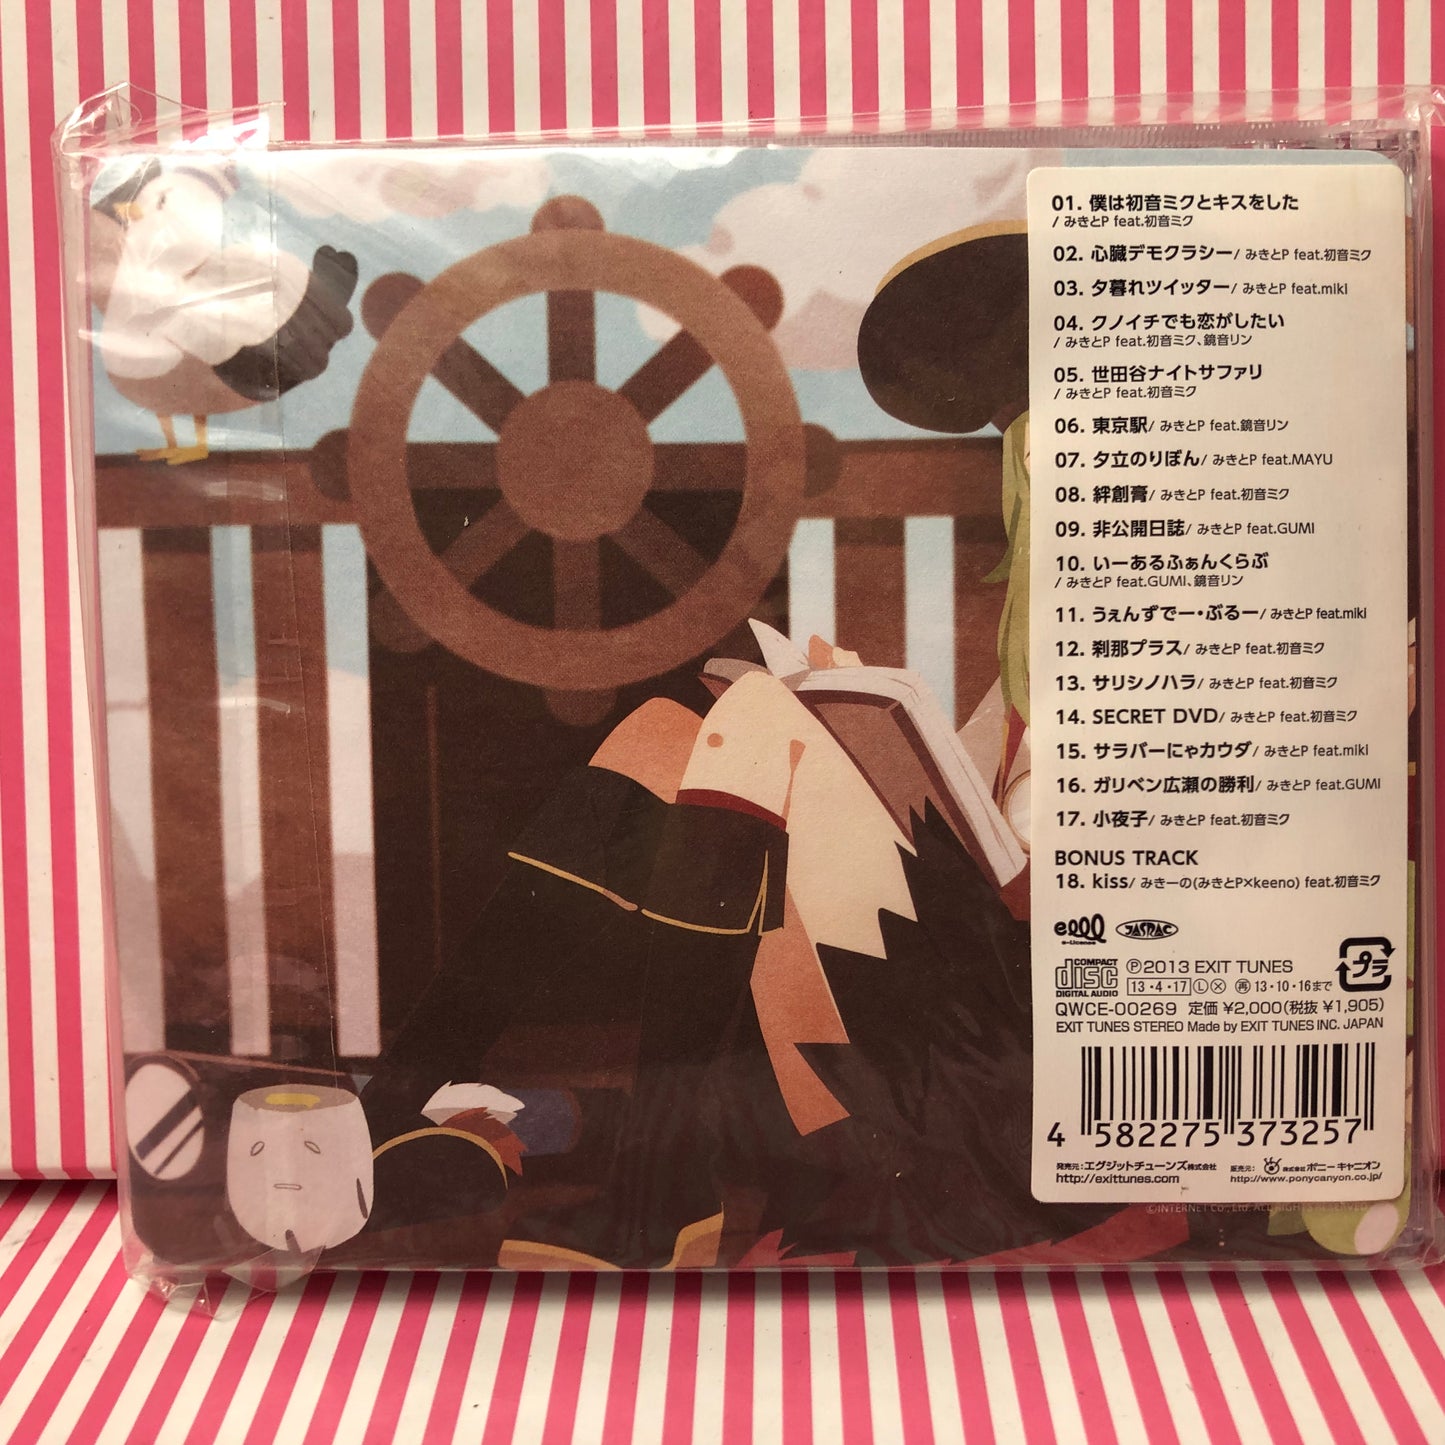 Boku wa Hatsune Miku to Kiss wo Shita by Mikito-P [Limited Ed.] (+ Mousepad)